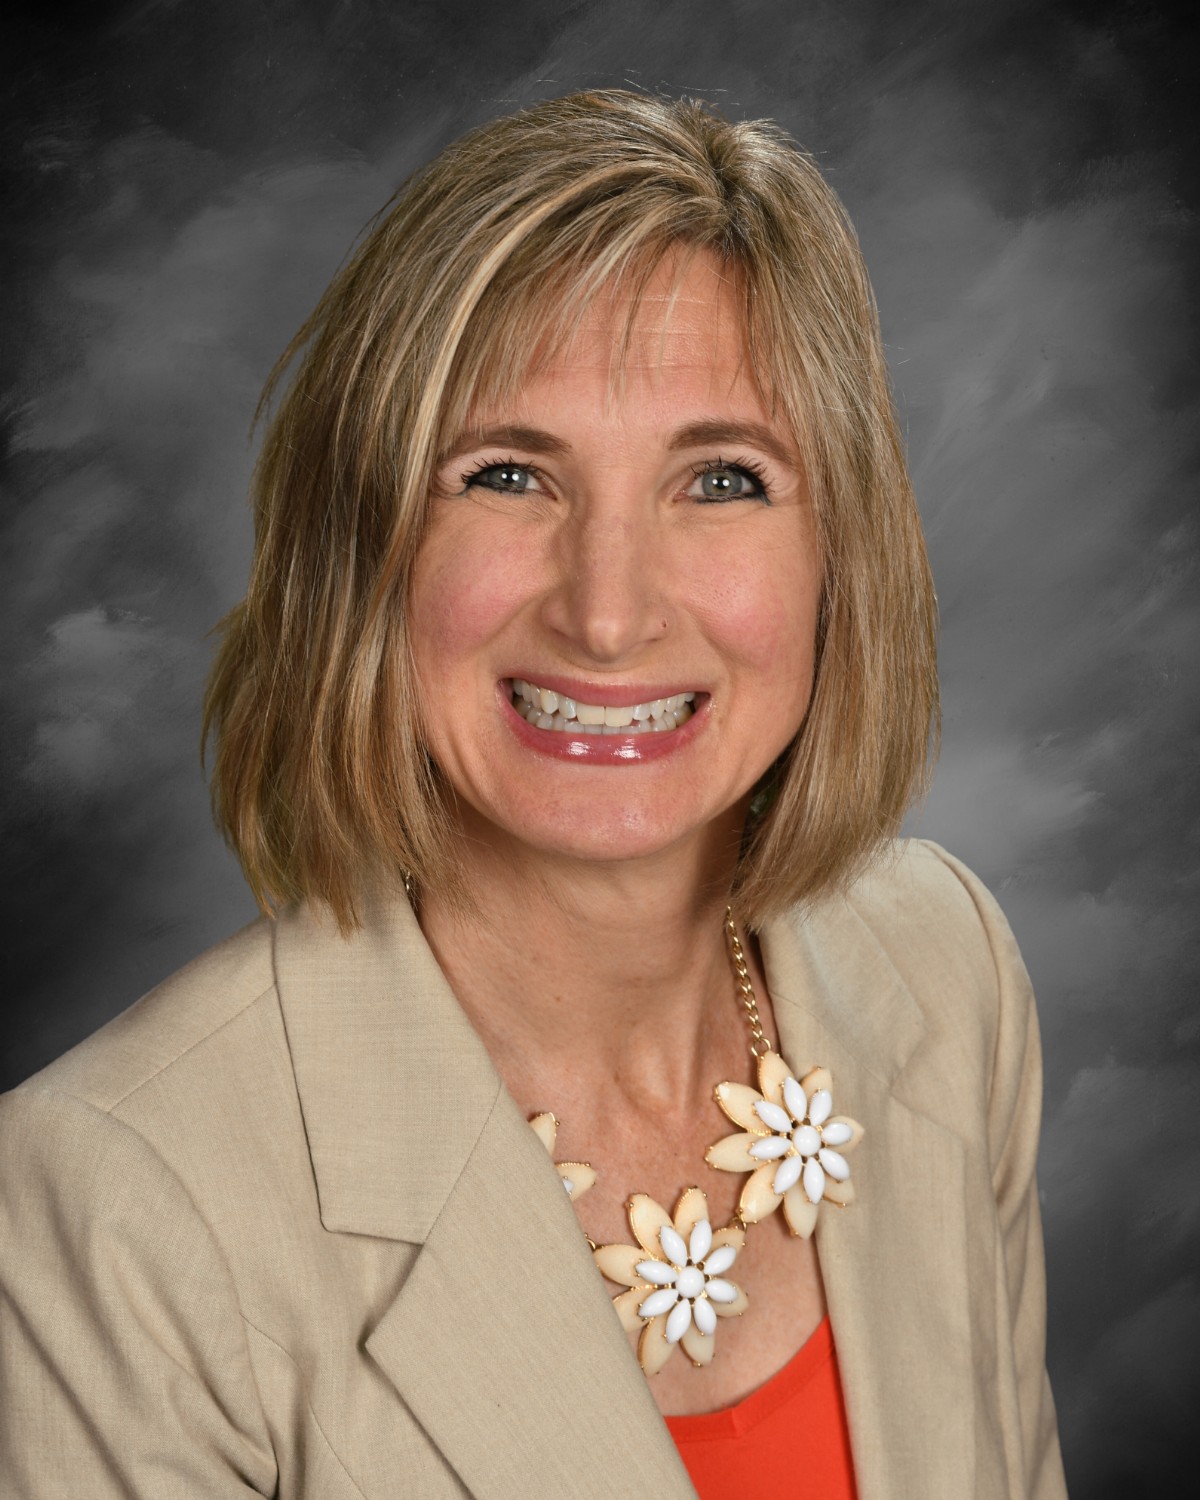 Brenda Richman, Executive Director of Community Engagement & Public Relations